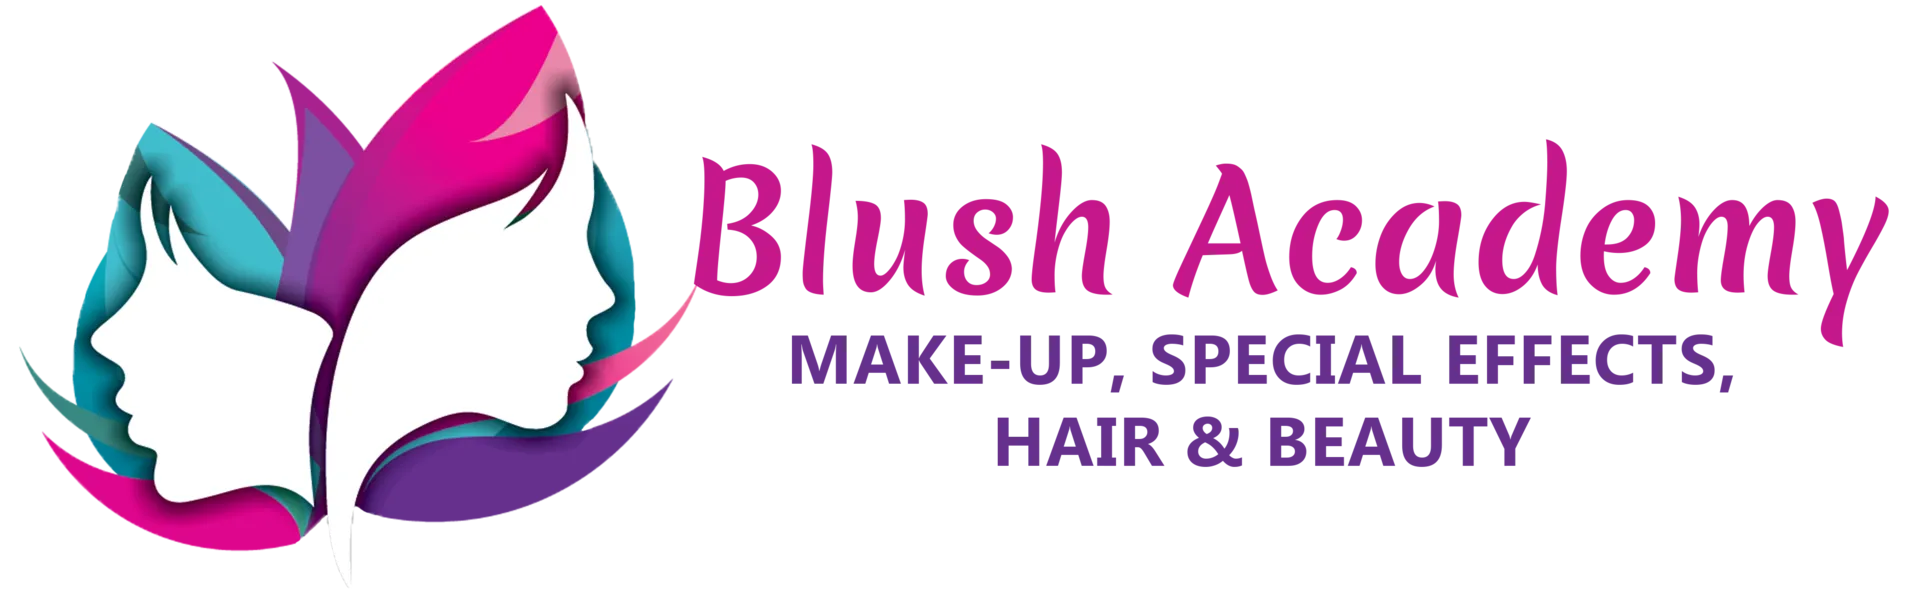 Blush Academy